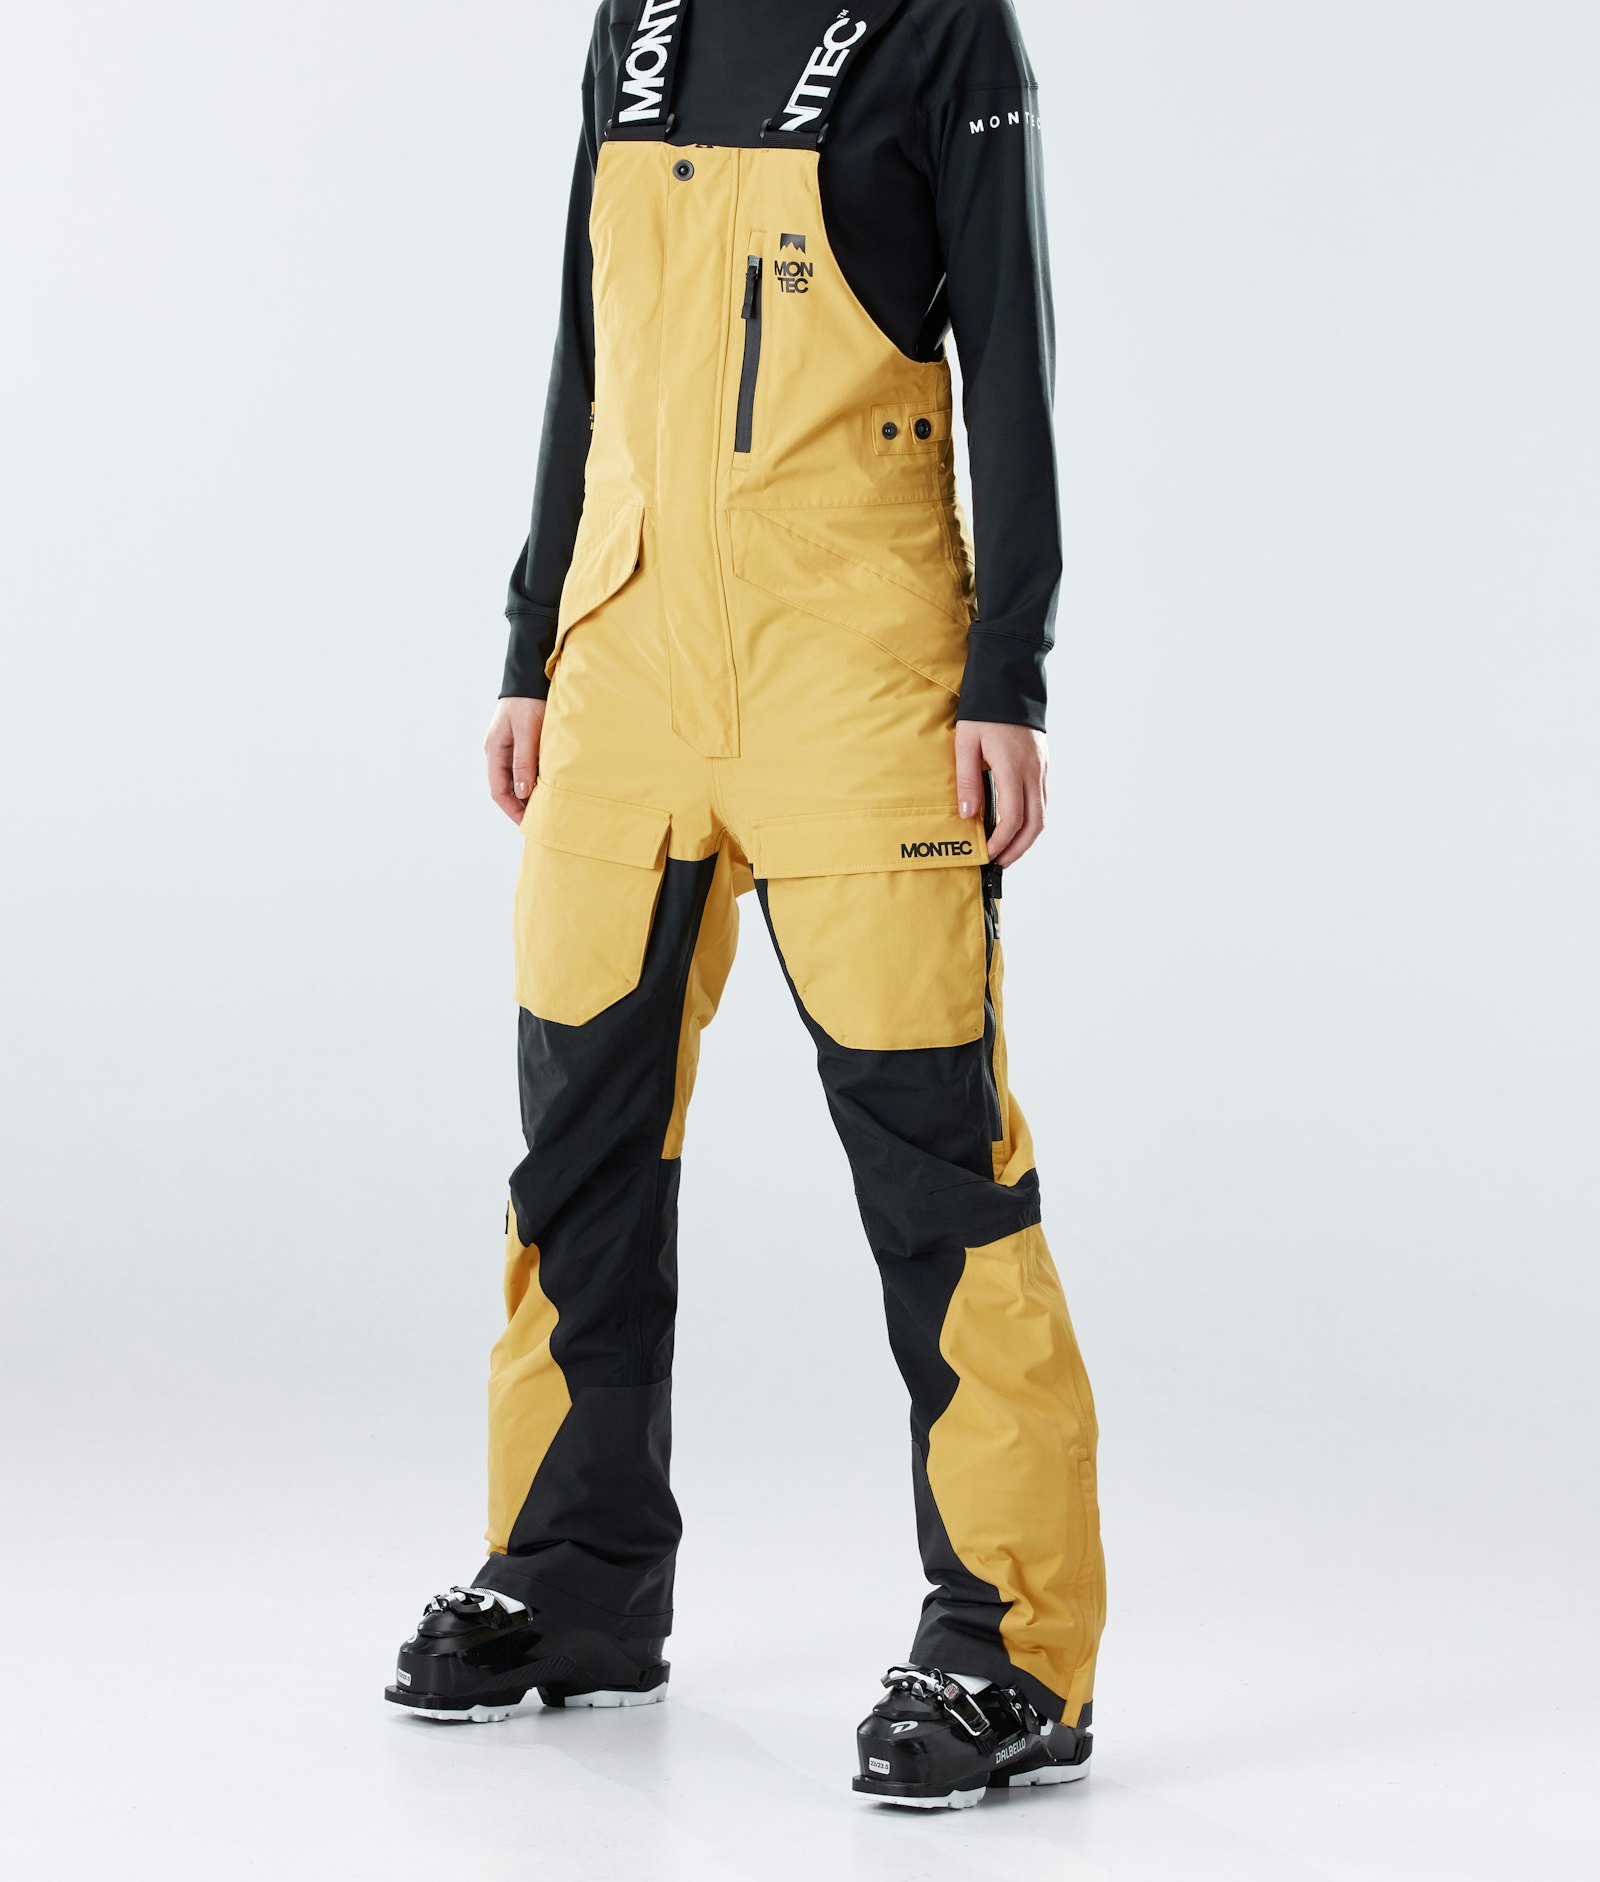 Fawk W 2020 Pantalones Esquí Mujer Yellow/Black